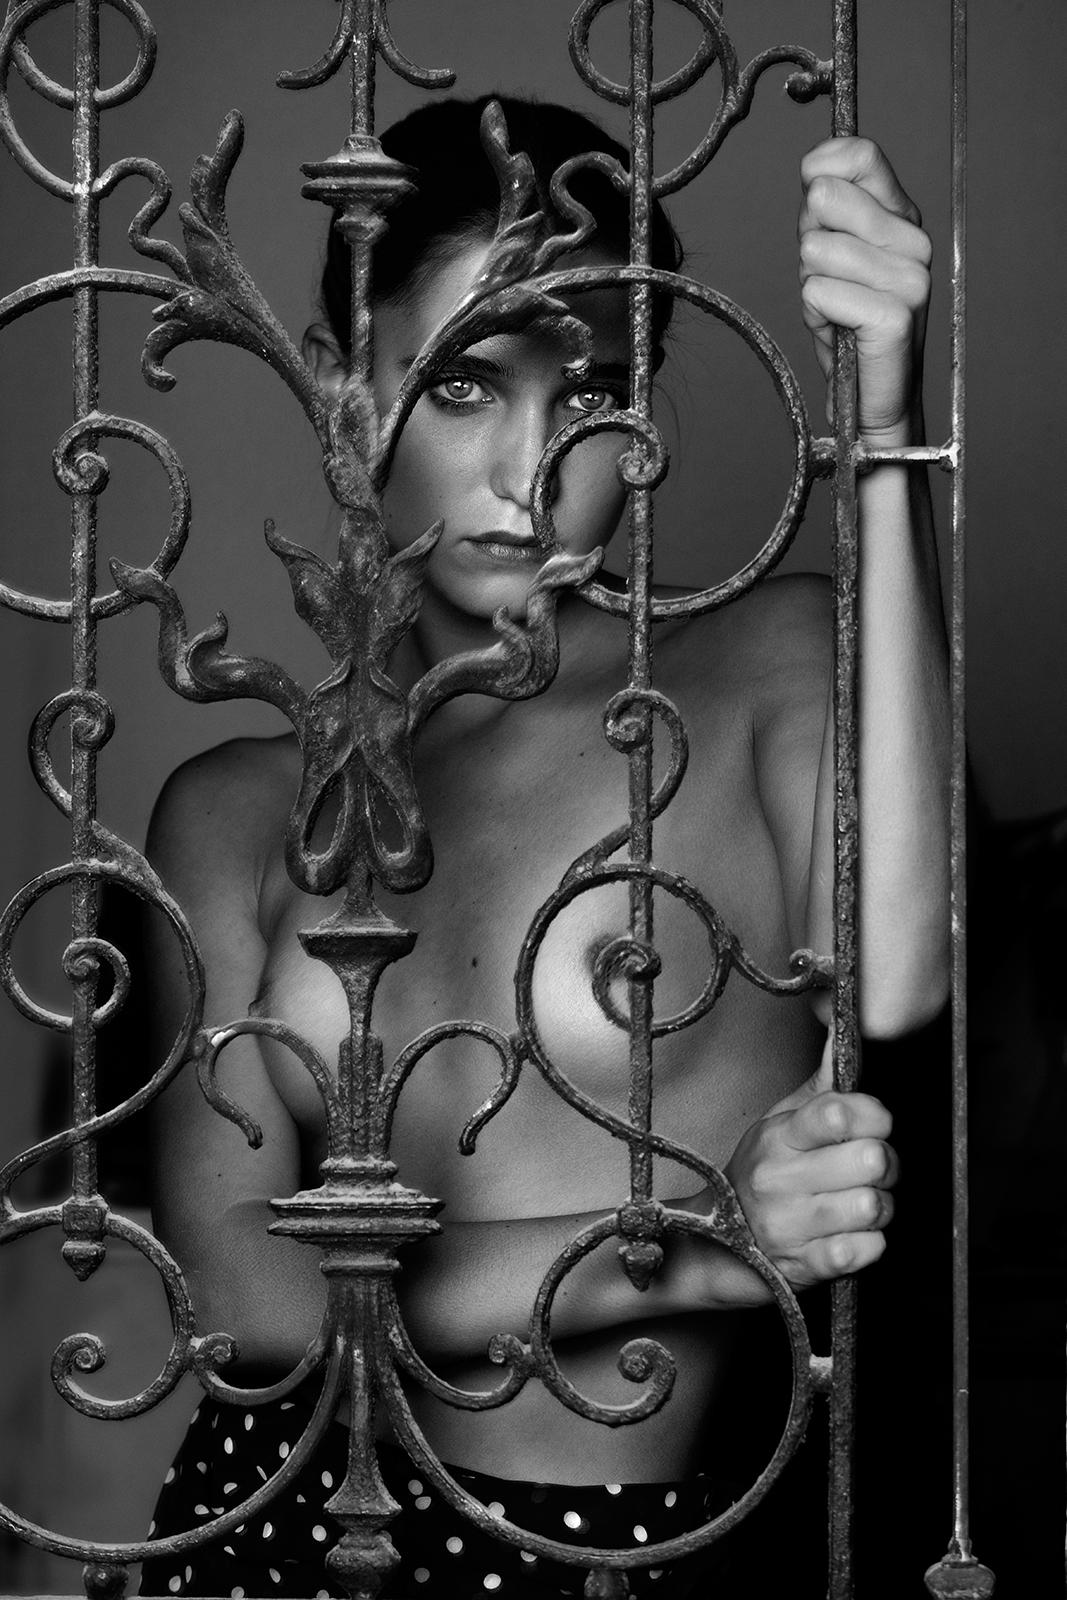 Ian Sanderson Nude Photograph – Signierter Aktdruck in limitierter Auflage, Kunstdruck in limitierter Auflage, Frauenmodell, Intim, Caroline